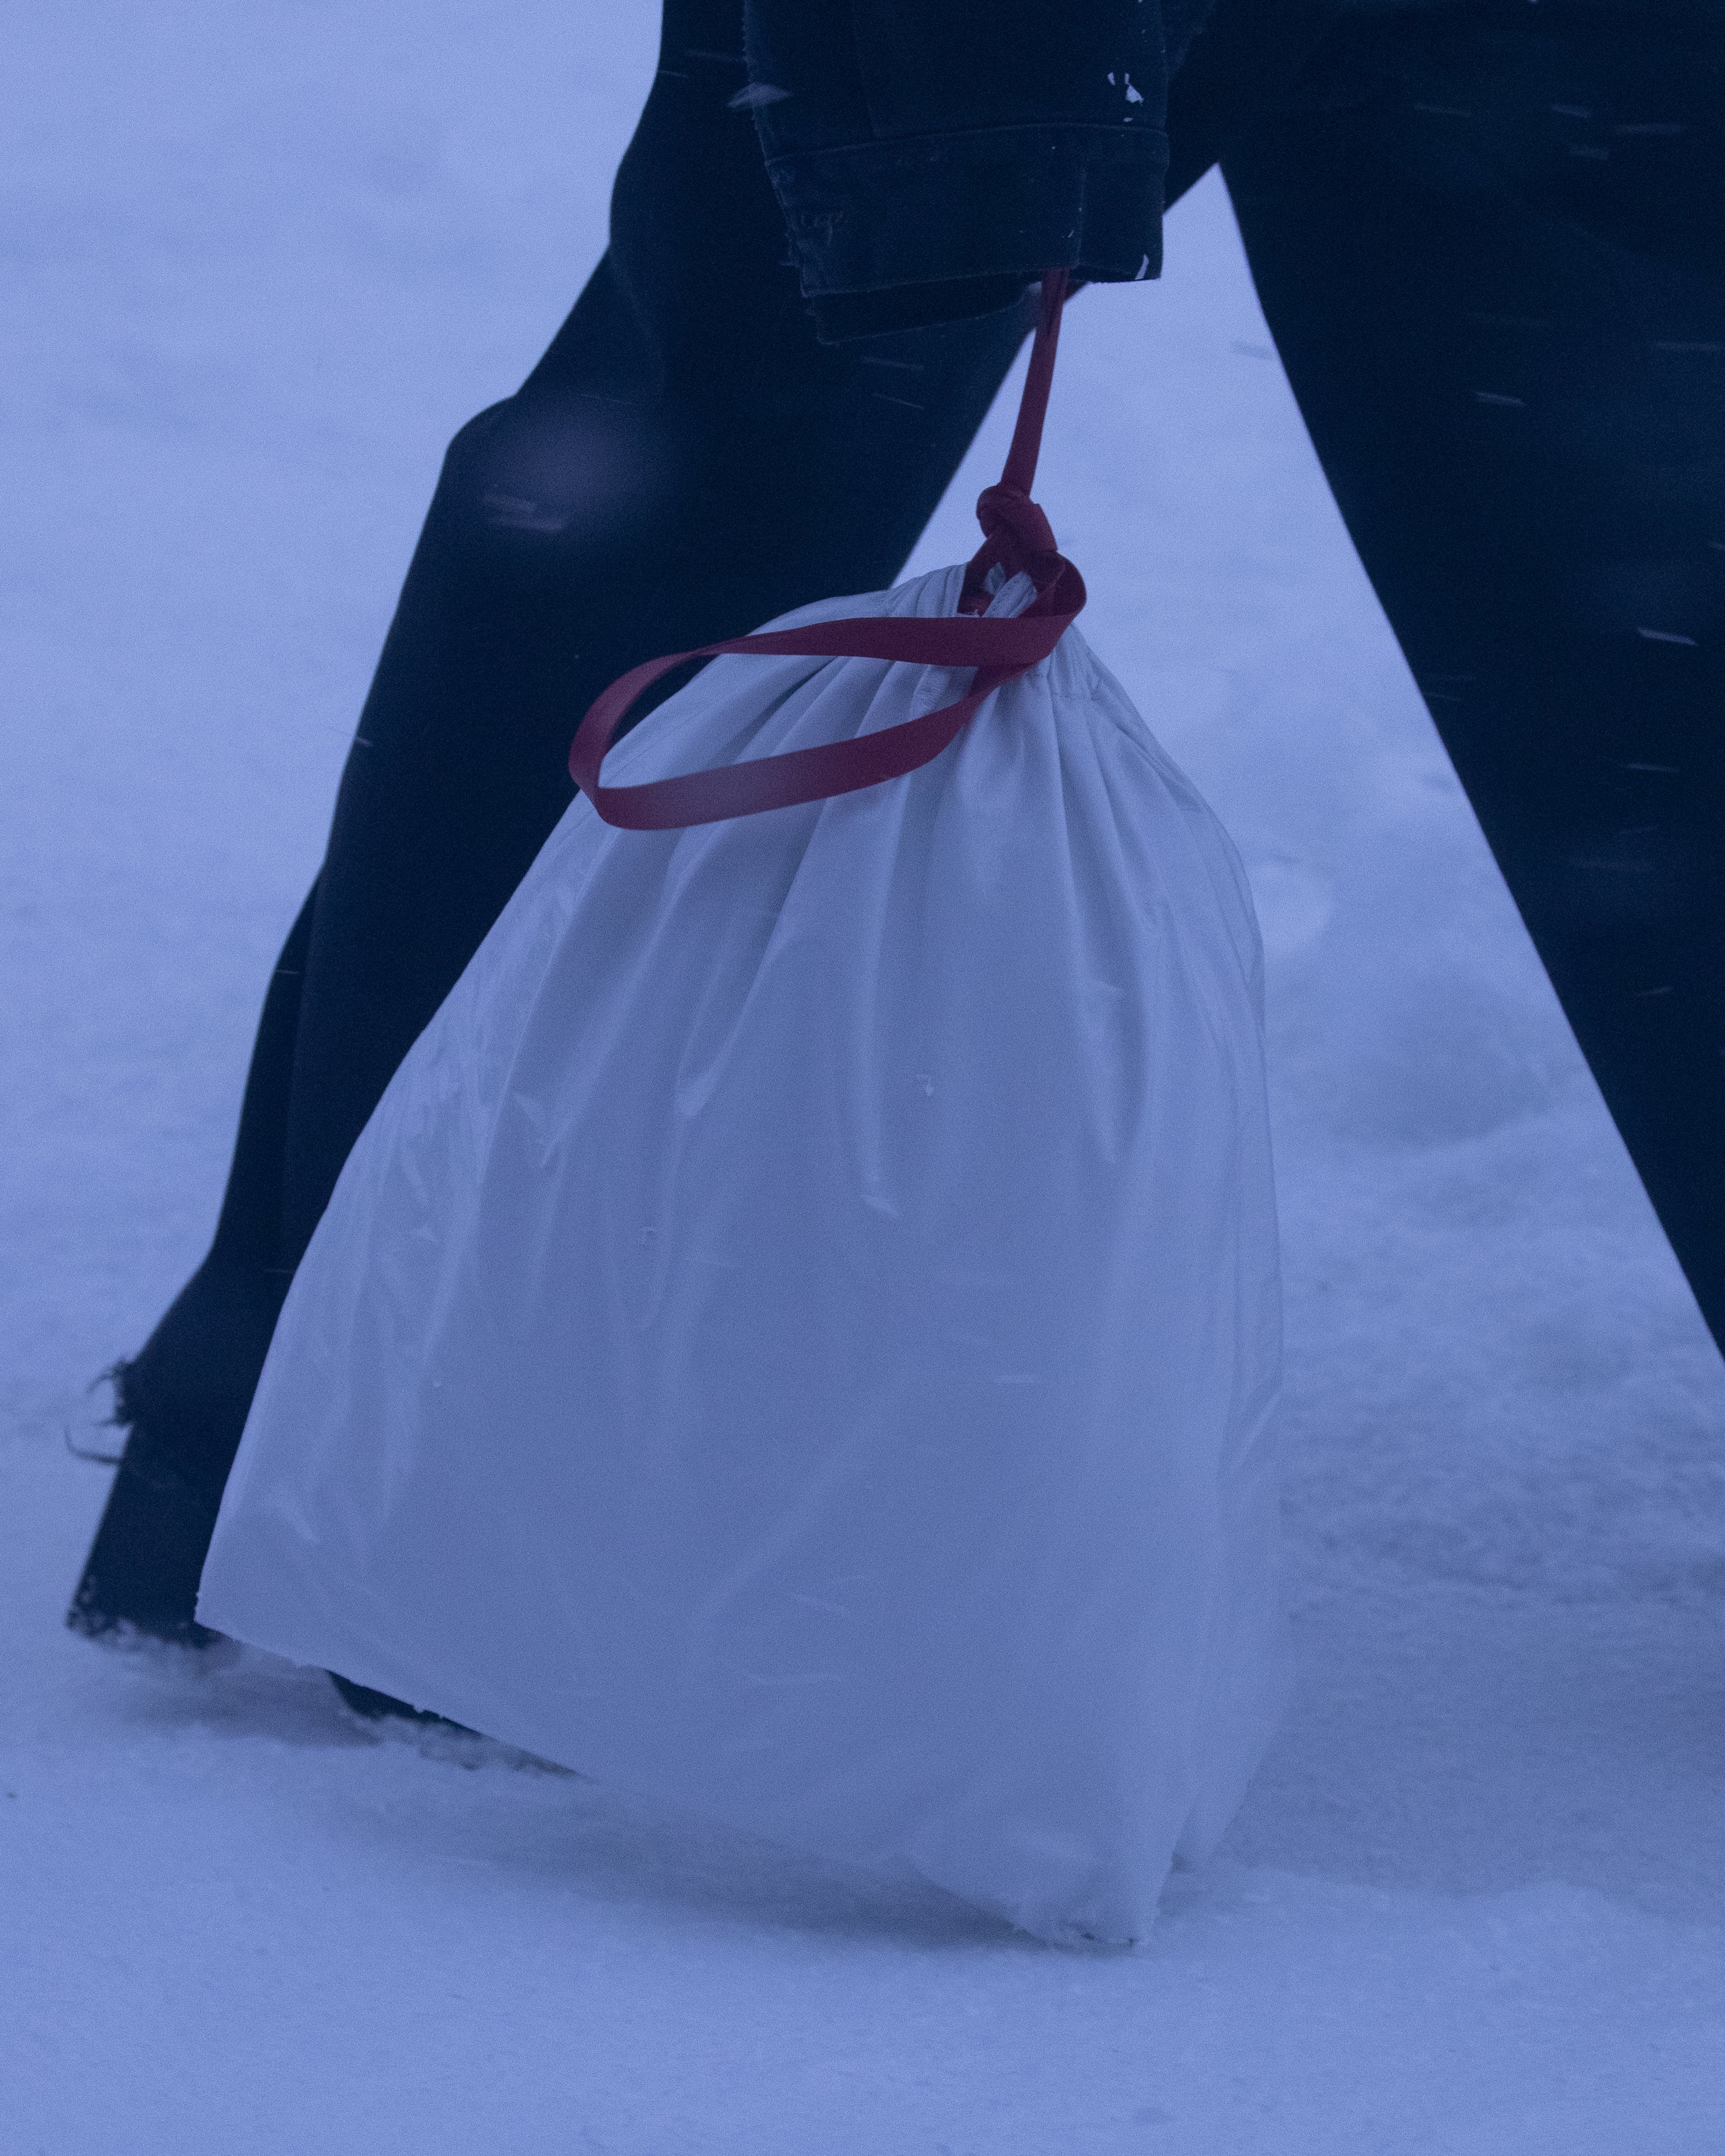 Balenciaga Large Trash Bag Pouch